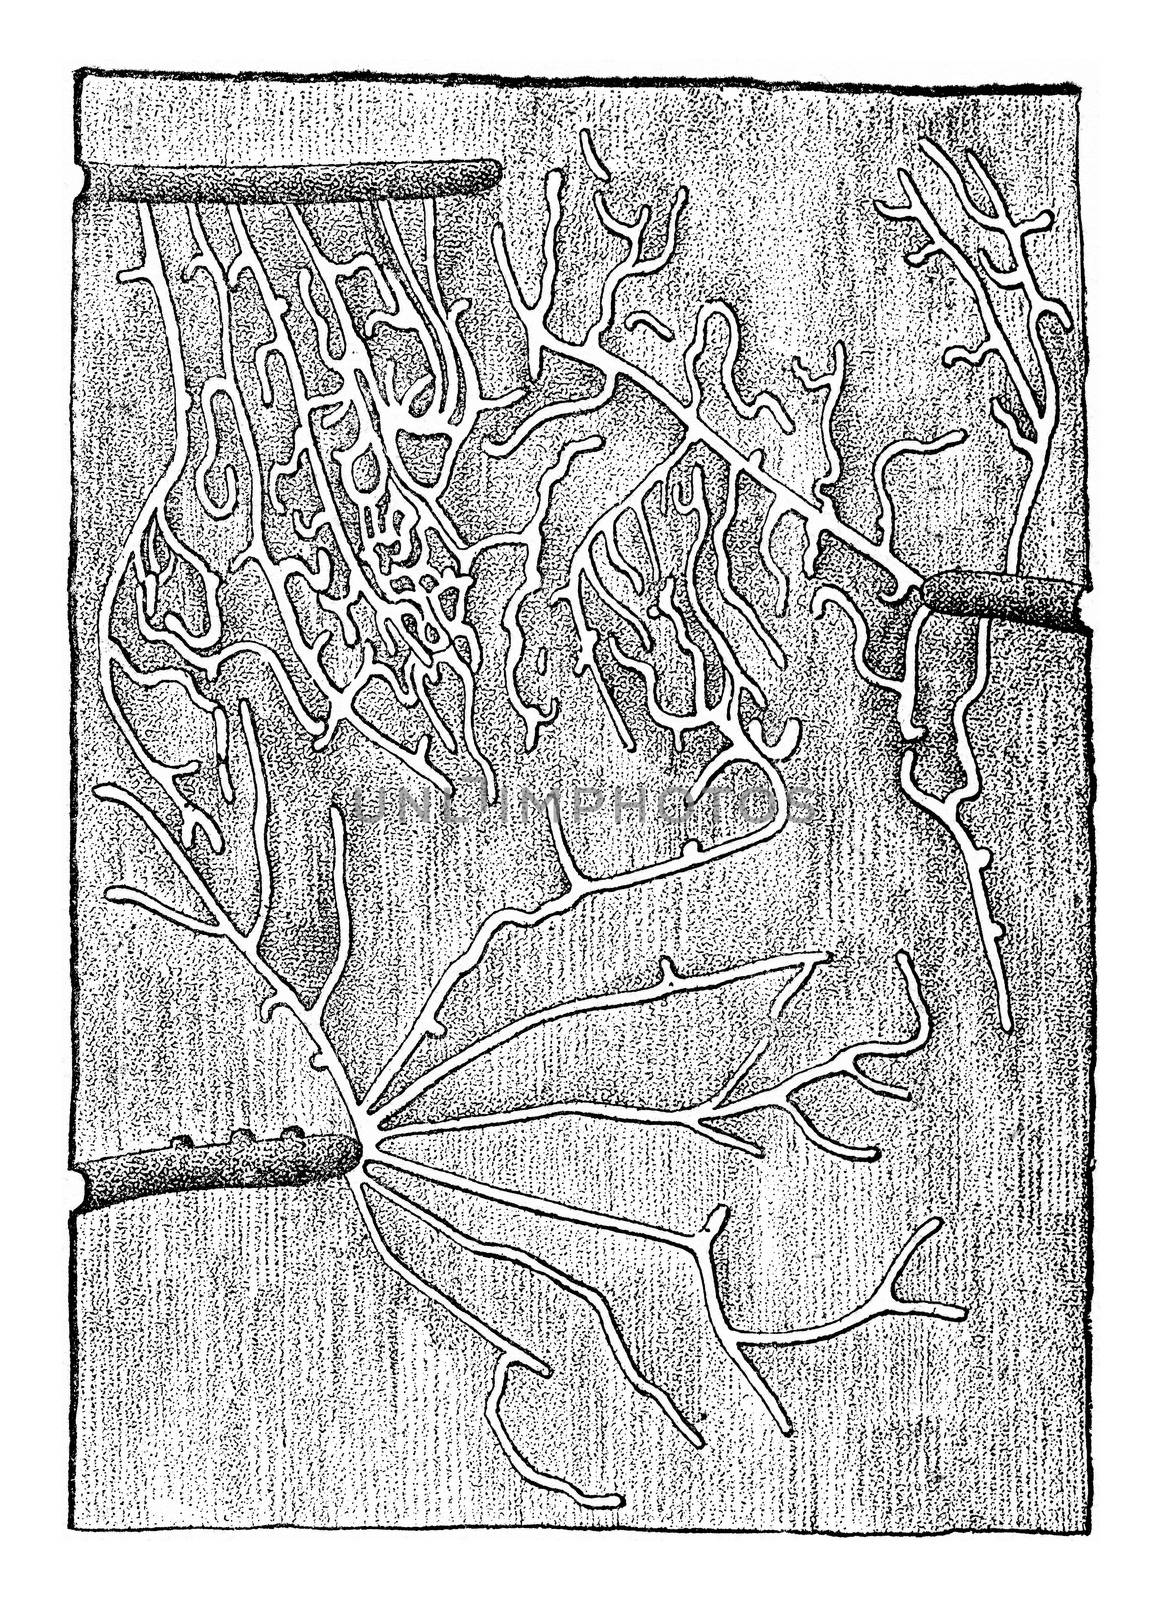 Larval galleries Tomicus pusillus, under the bark of pine, vinta by Morphart